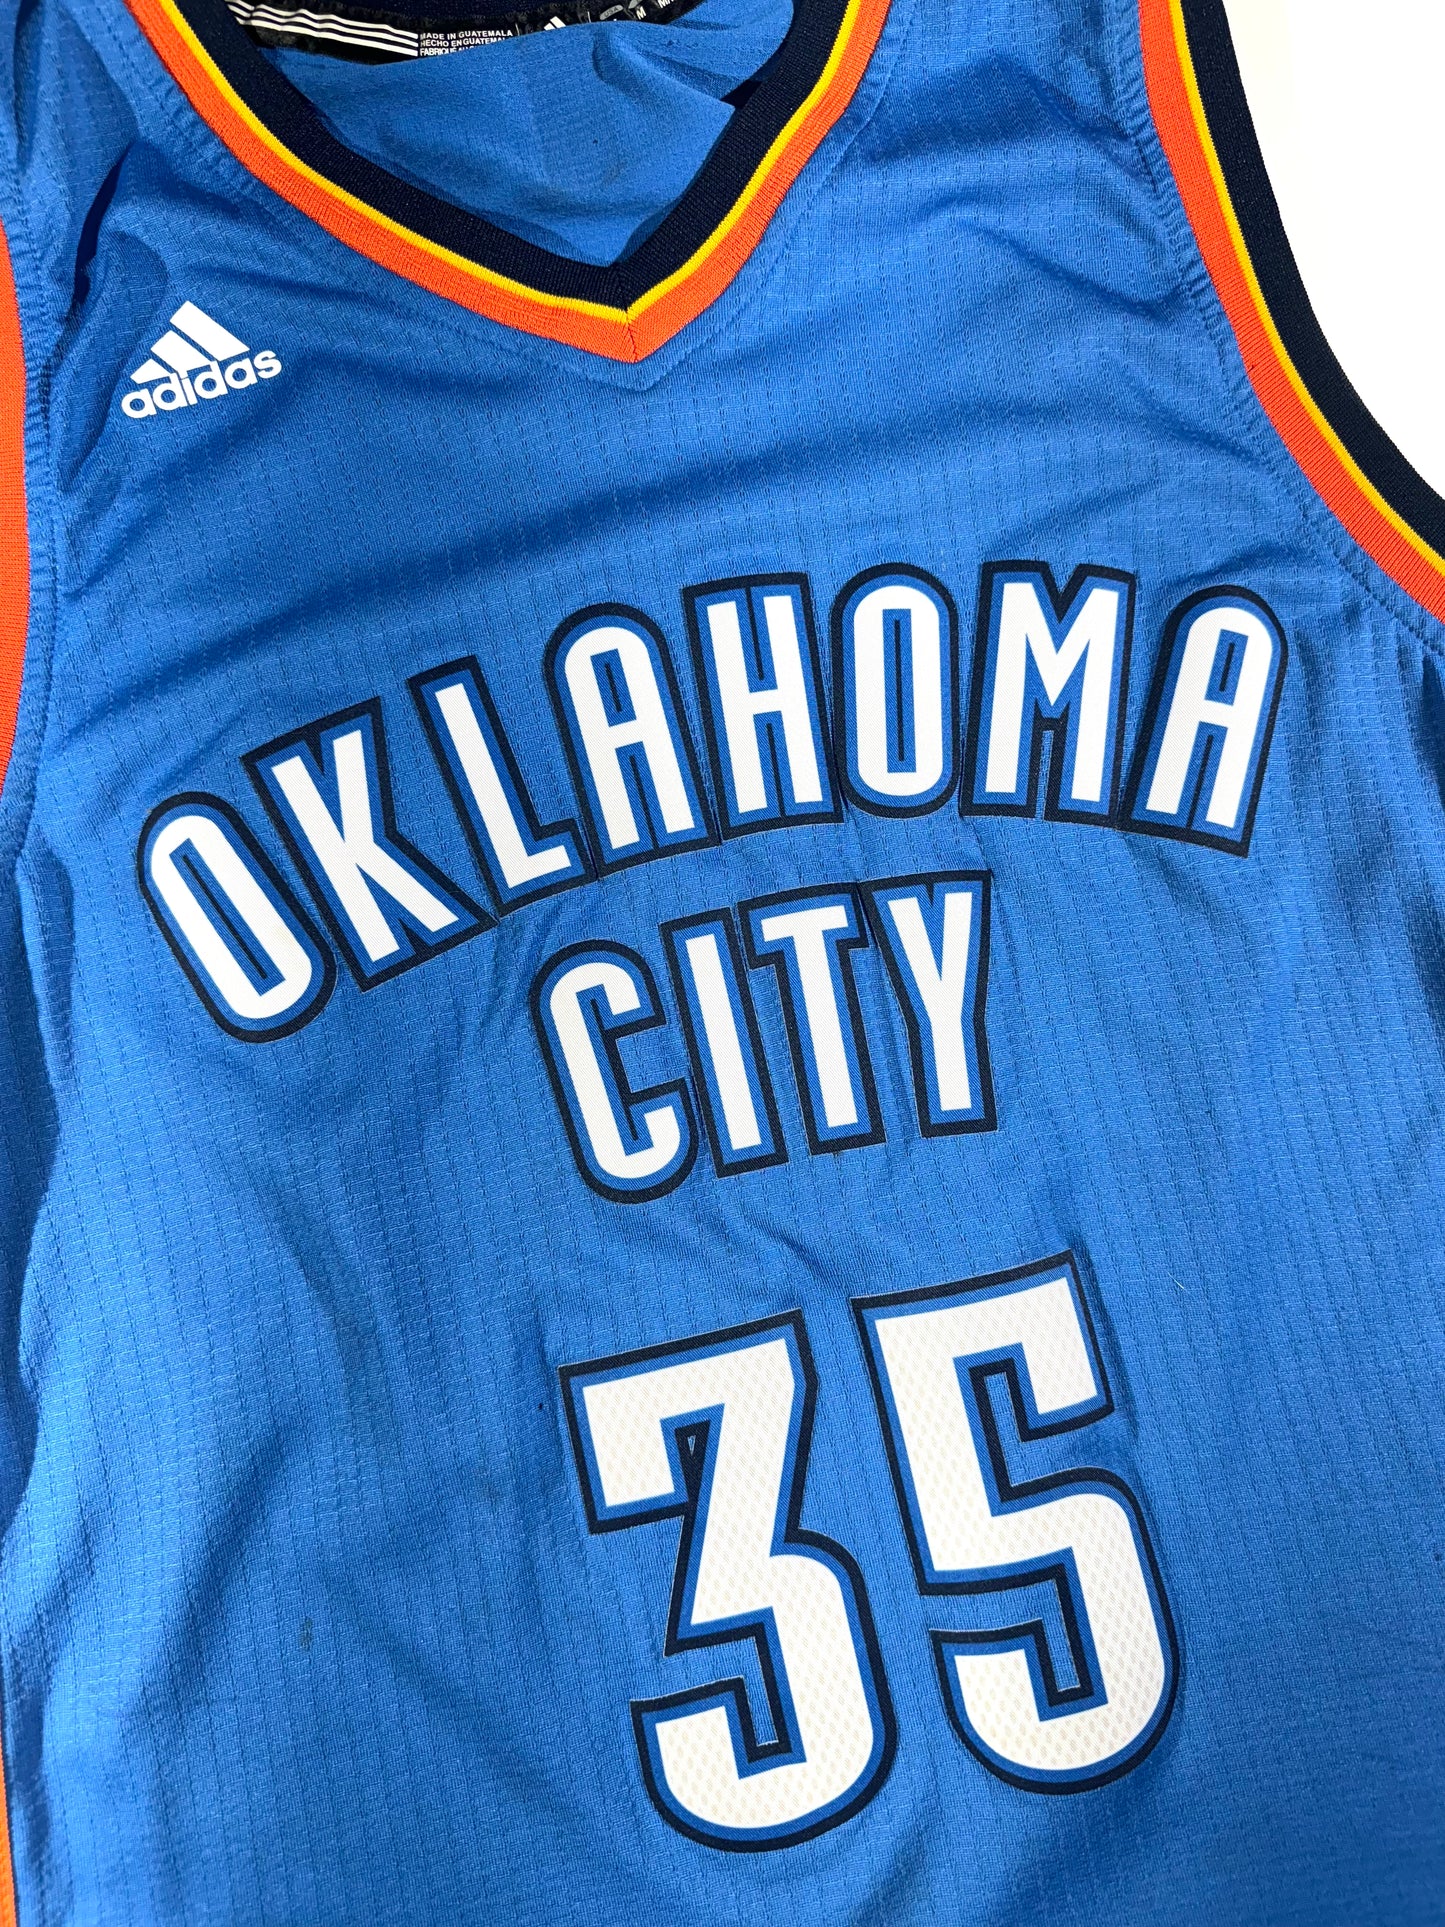 Vintage OKC NBA Jersey Kevin Durant 35 EMS Adidas